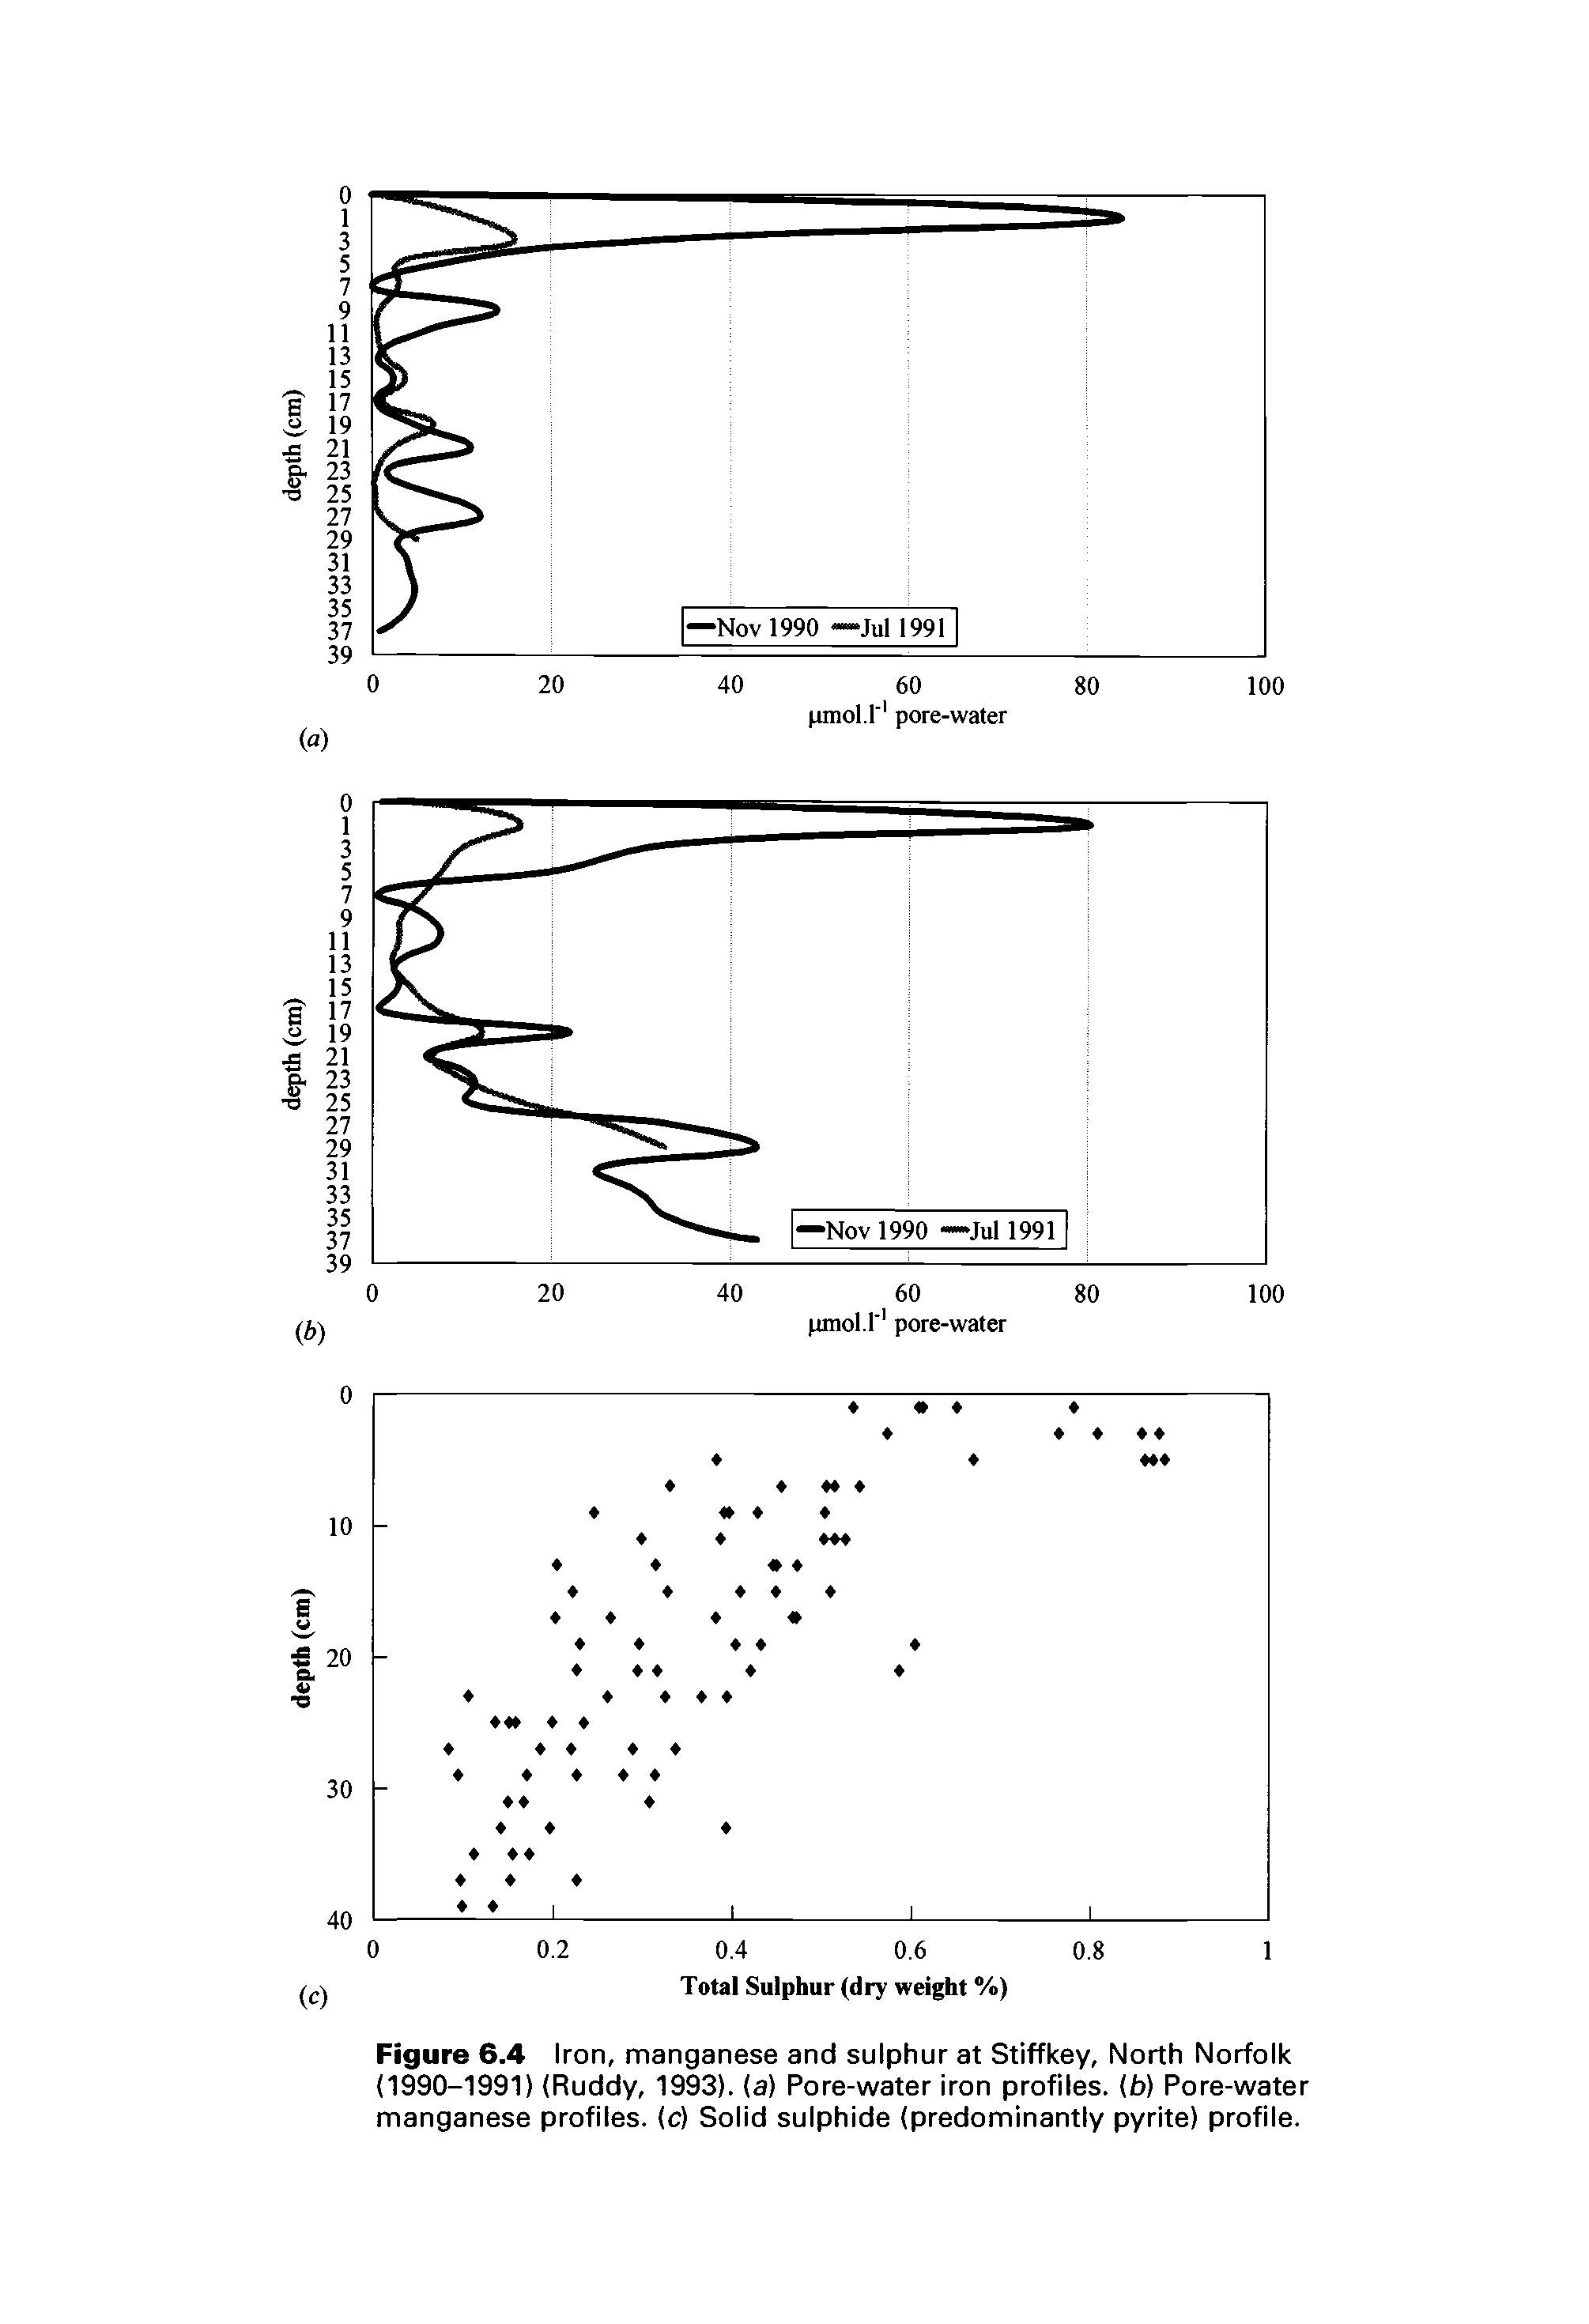 Figure 6.4 Iron, manganese and sulphur at Stiffkey, North Norfolk (1990-1991) (Ruddy, 1993). (a) Pore-water iron profiles, (b) Pore-water manganese profiles, (c) Solid sulphide (predominantly pyrite) profile.